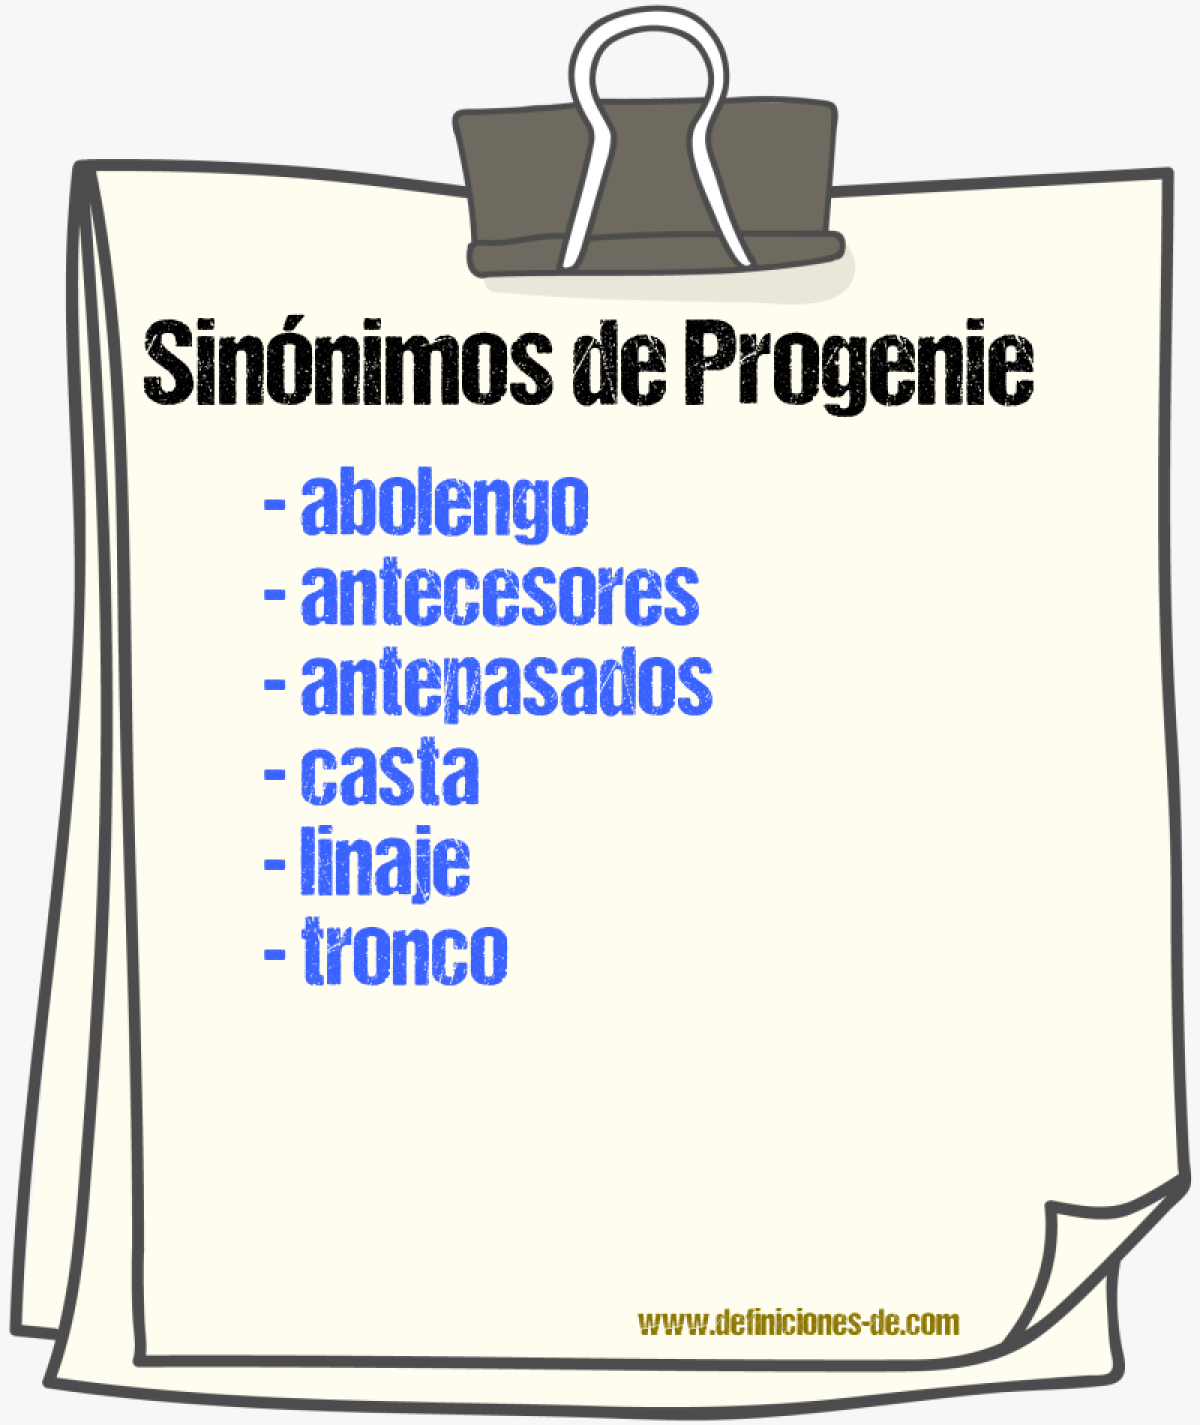 Sinónimos de progenie